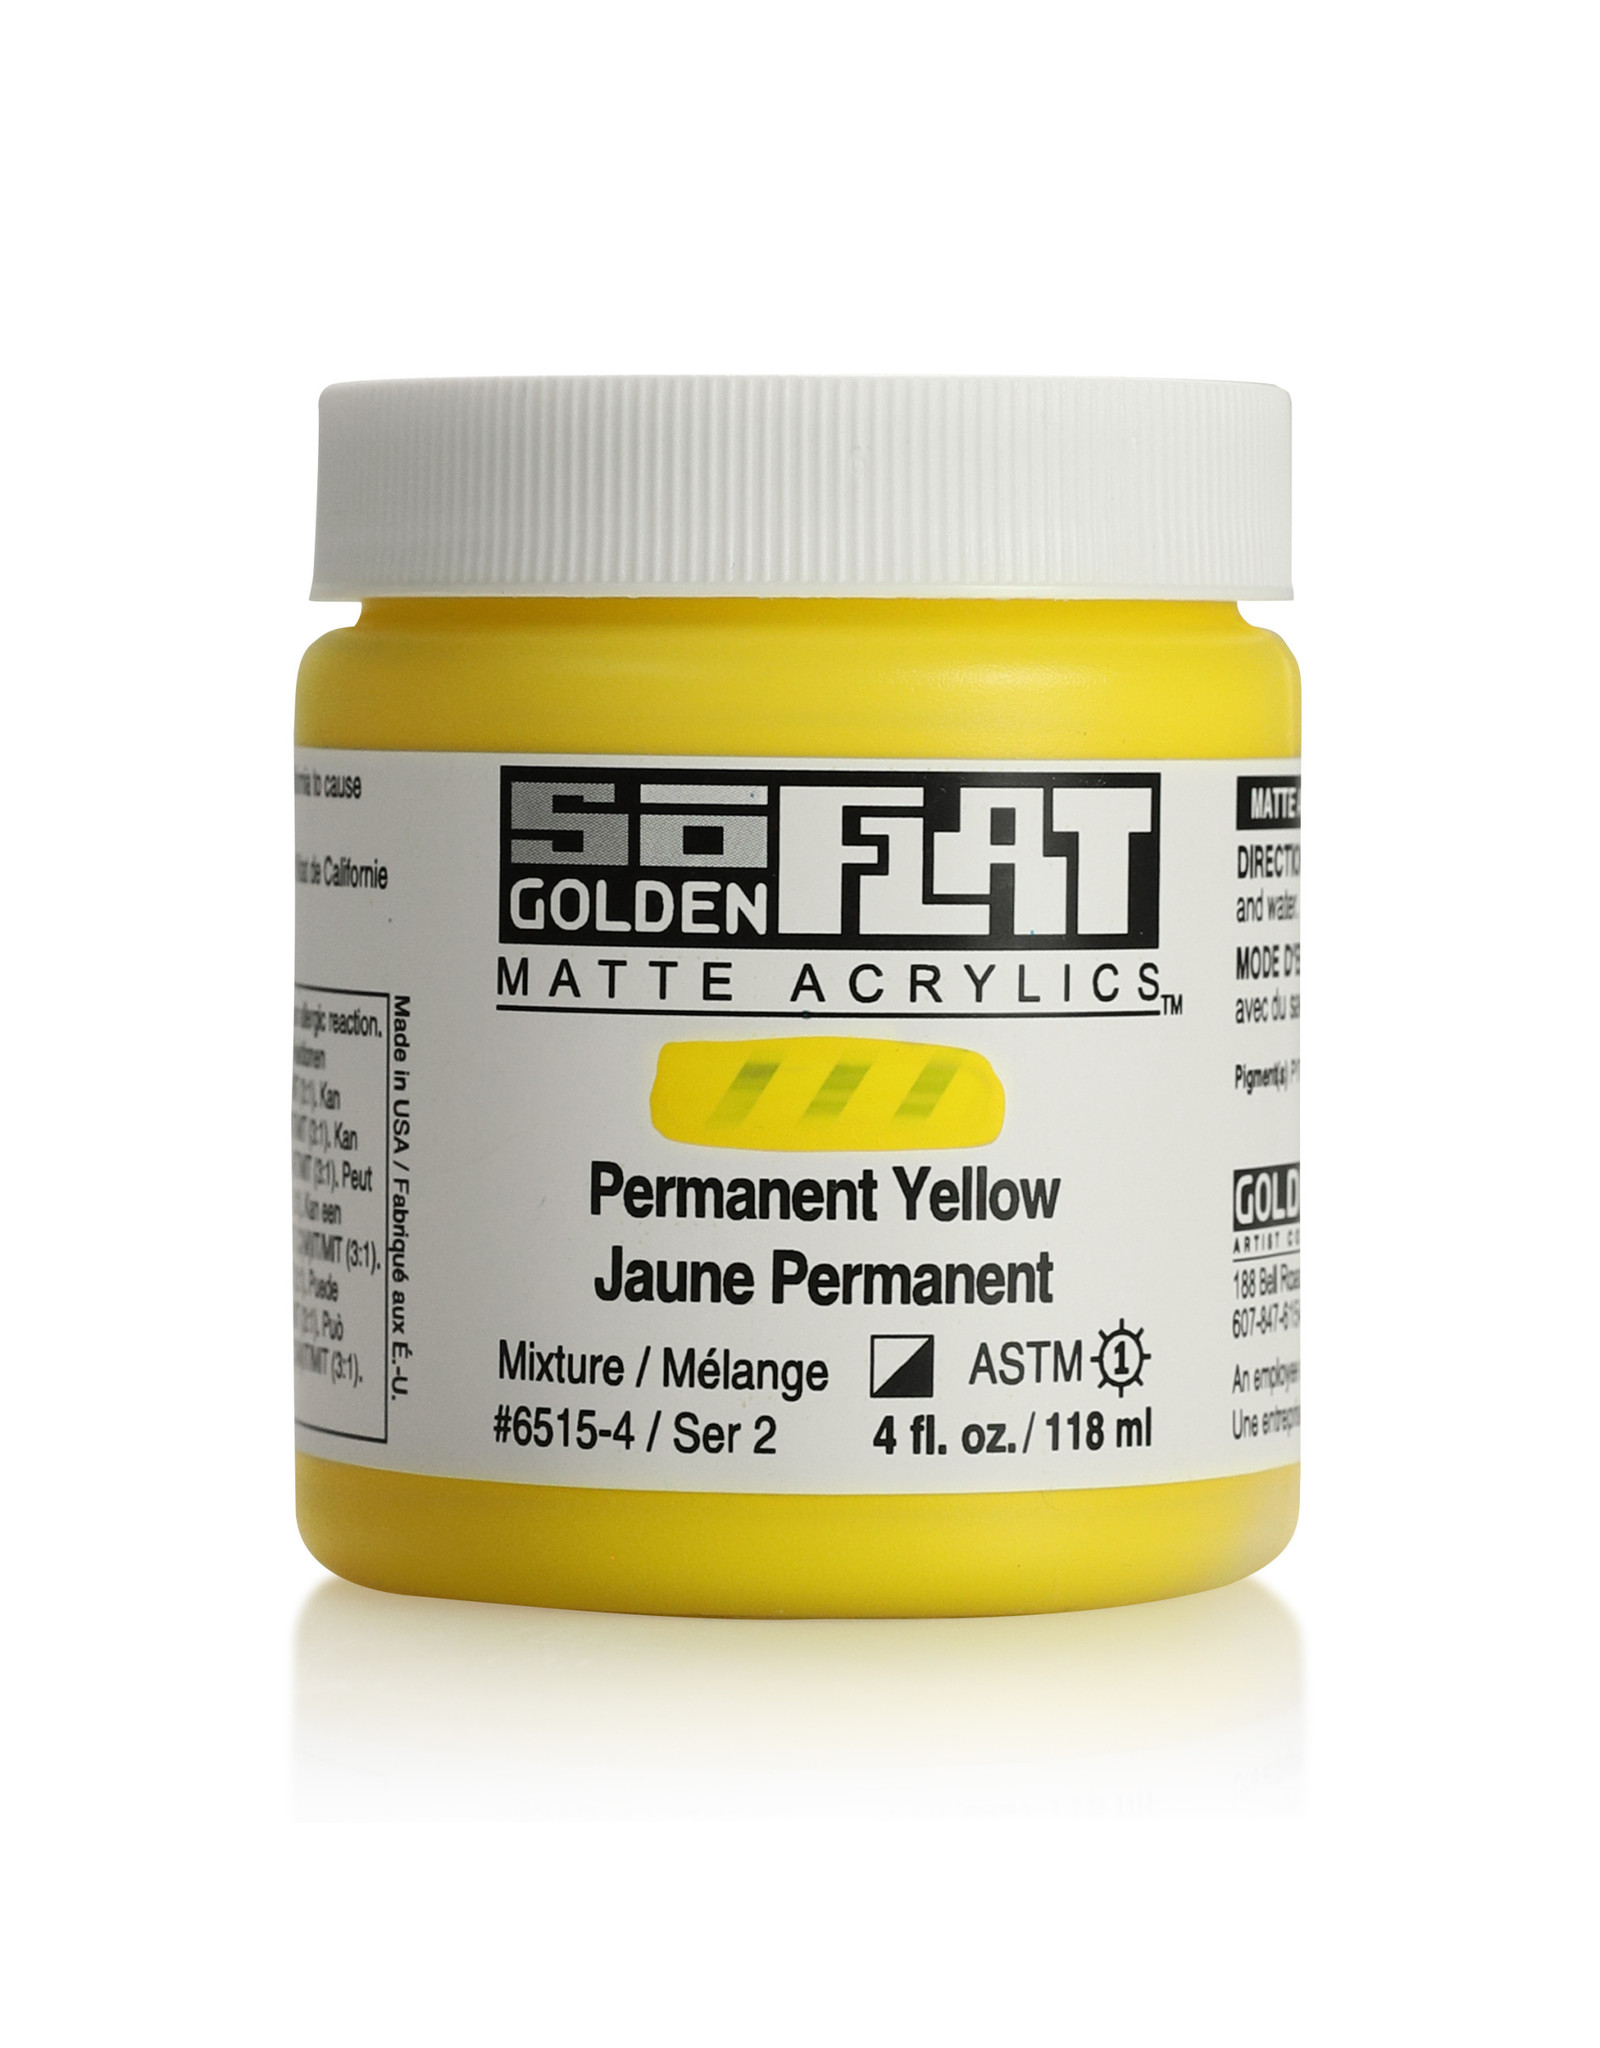 Golden SoFlat Matte Acrylic 2 oz Permanent Yellow